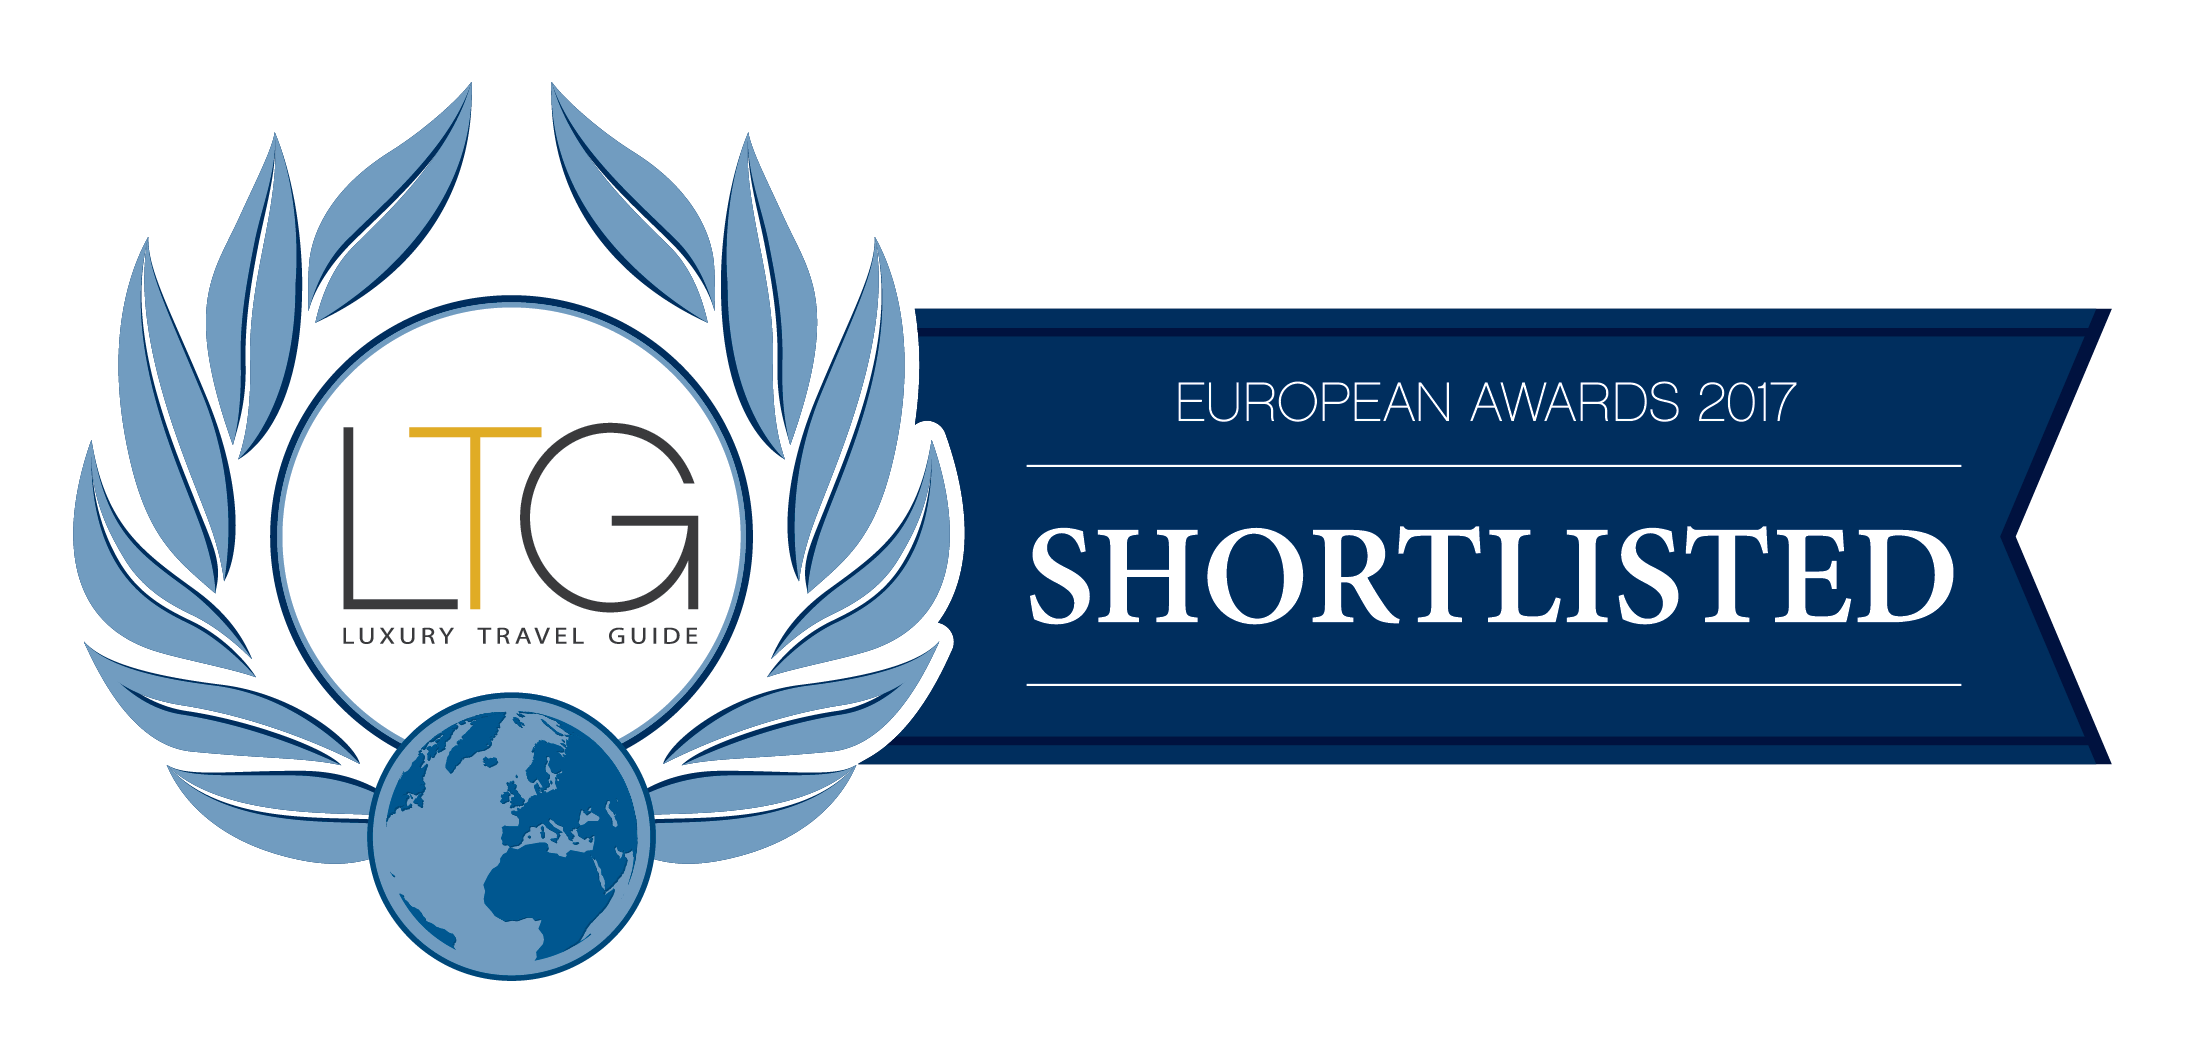 ltg-europe-2017-shortlisted